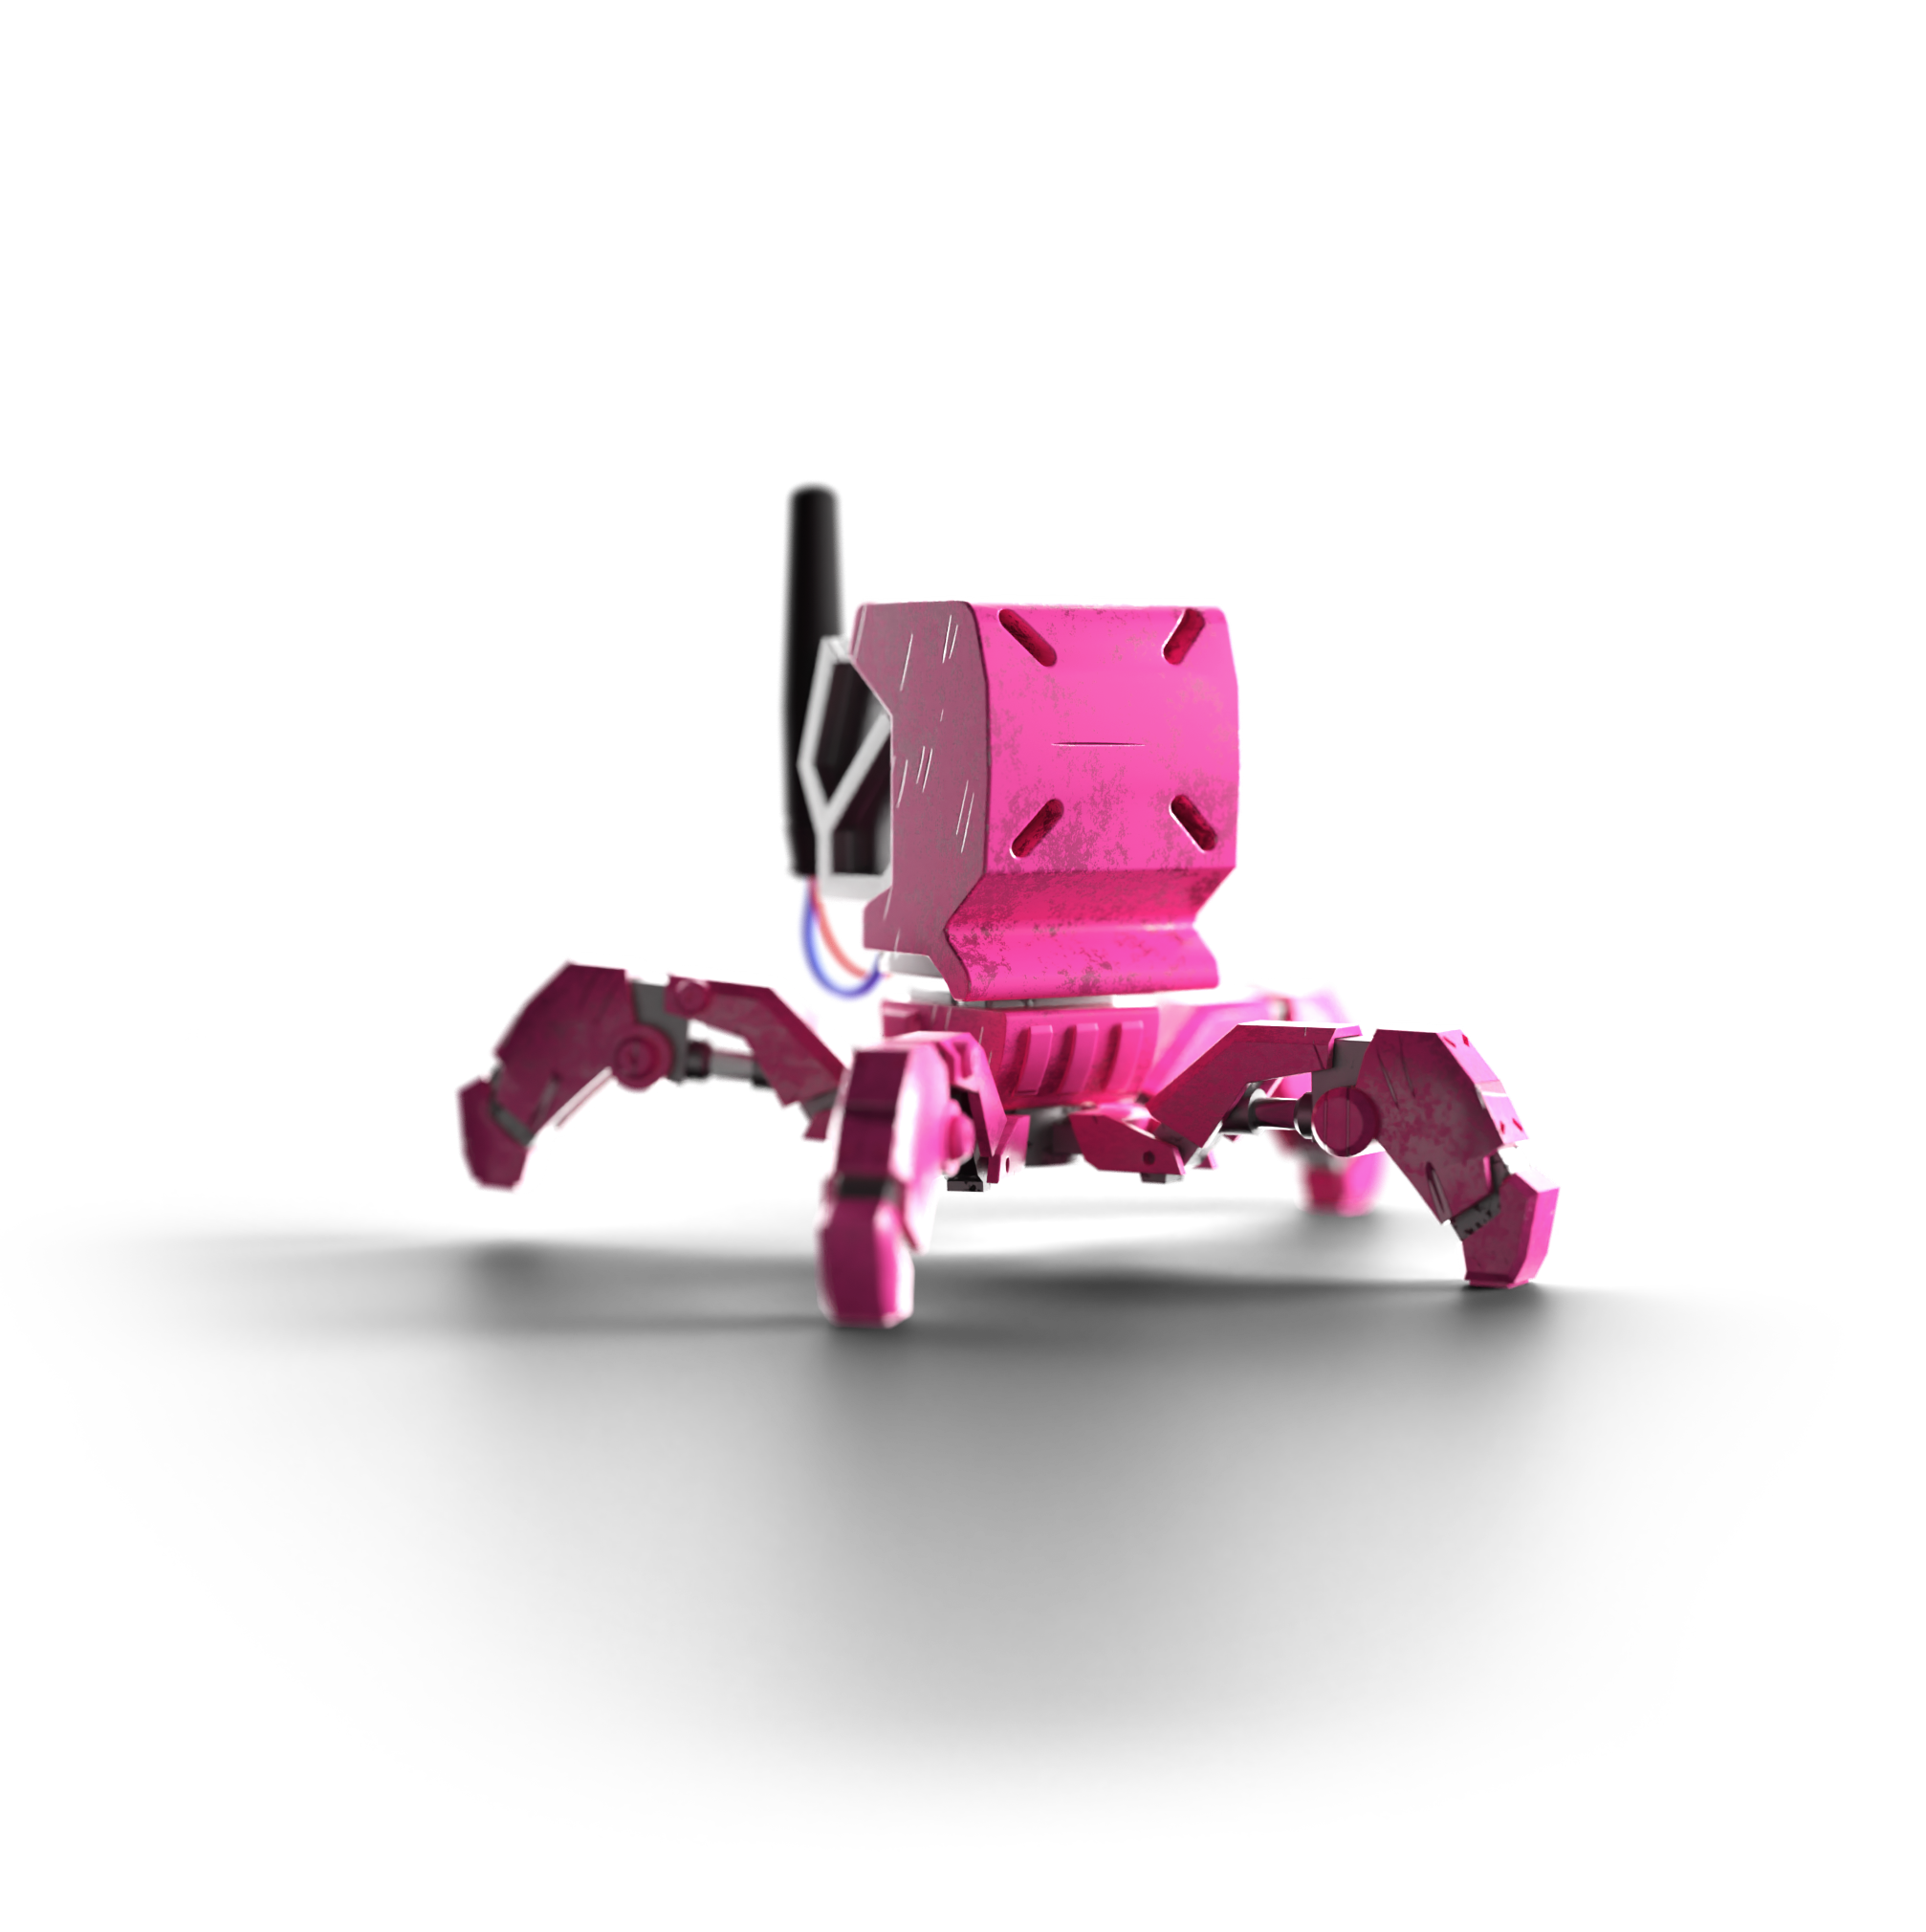 LittleBot_04-cropped-1